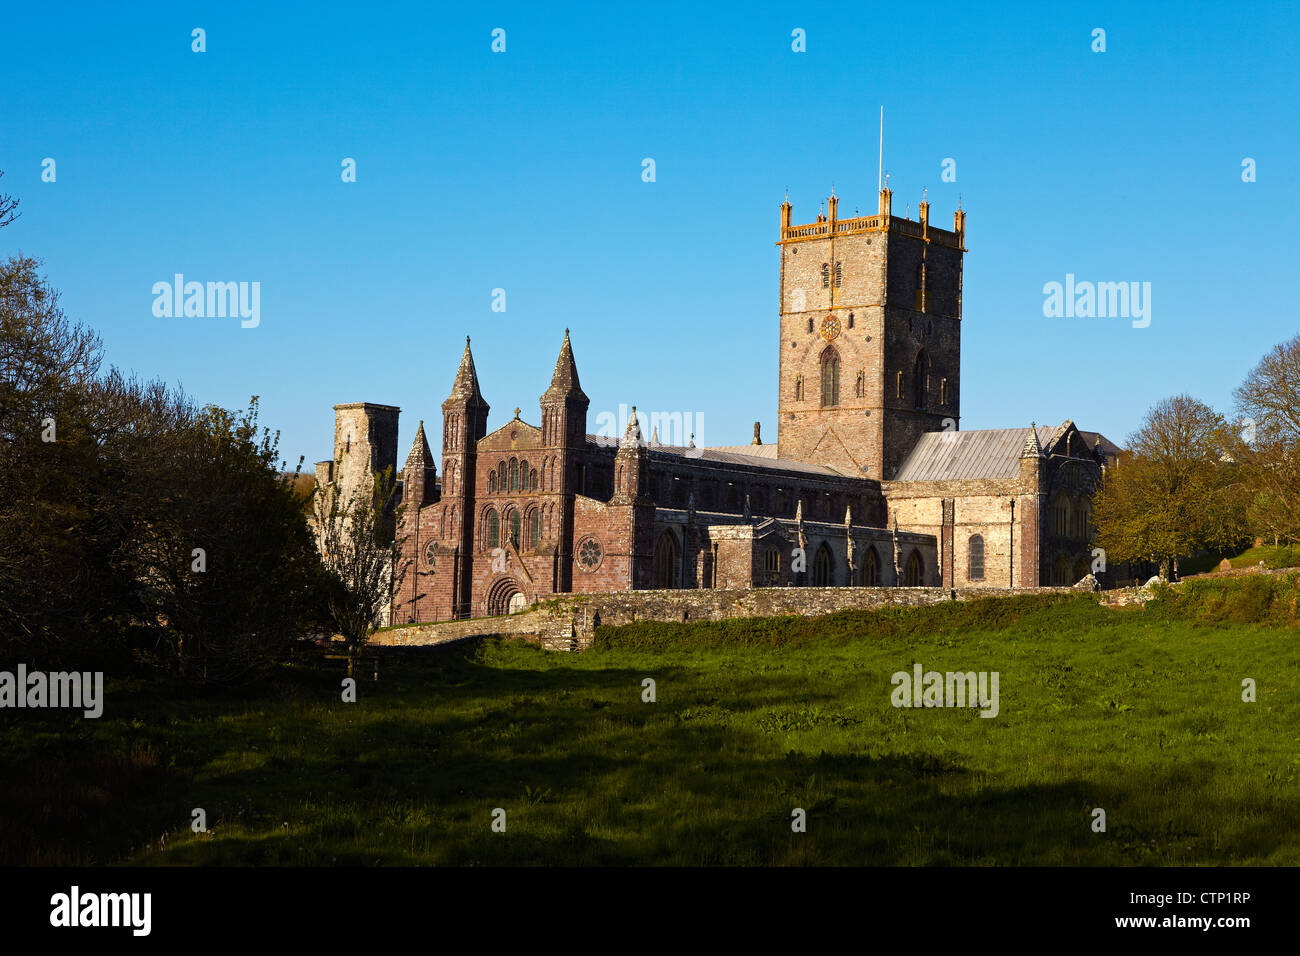 St David's Cathedral, St David's, Pembrokeshire, Wales, UK Stock Photo